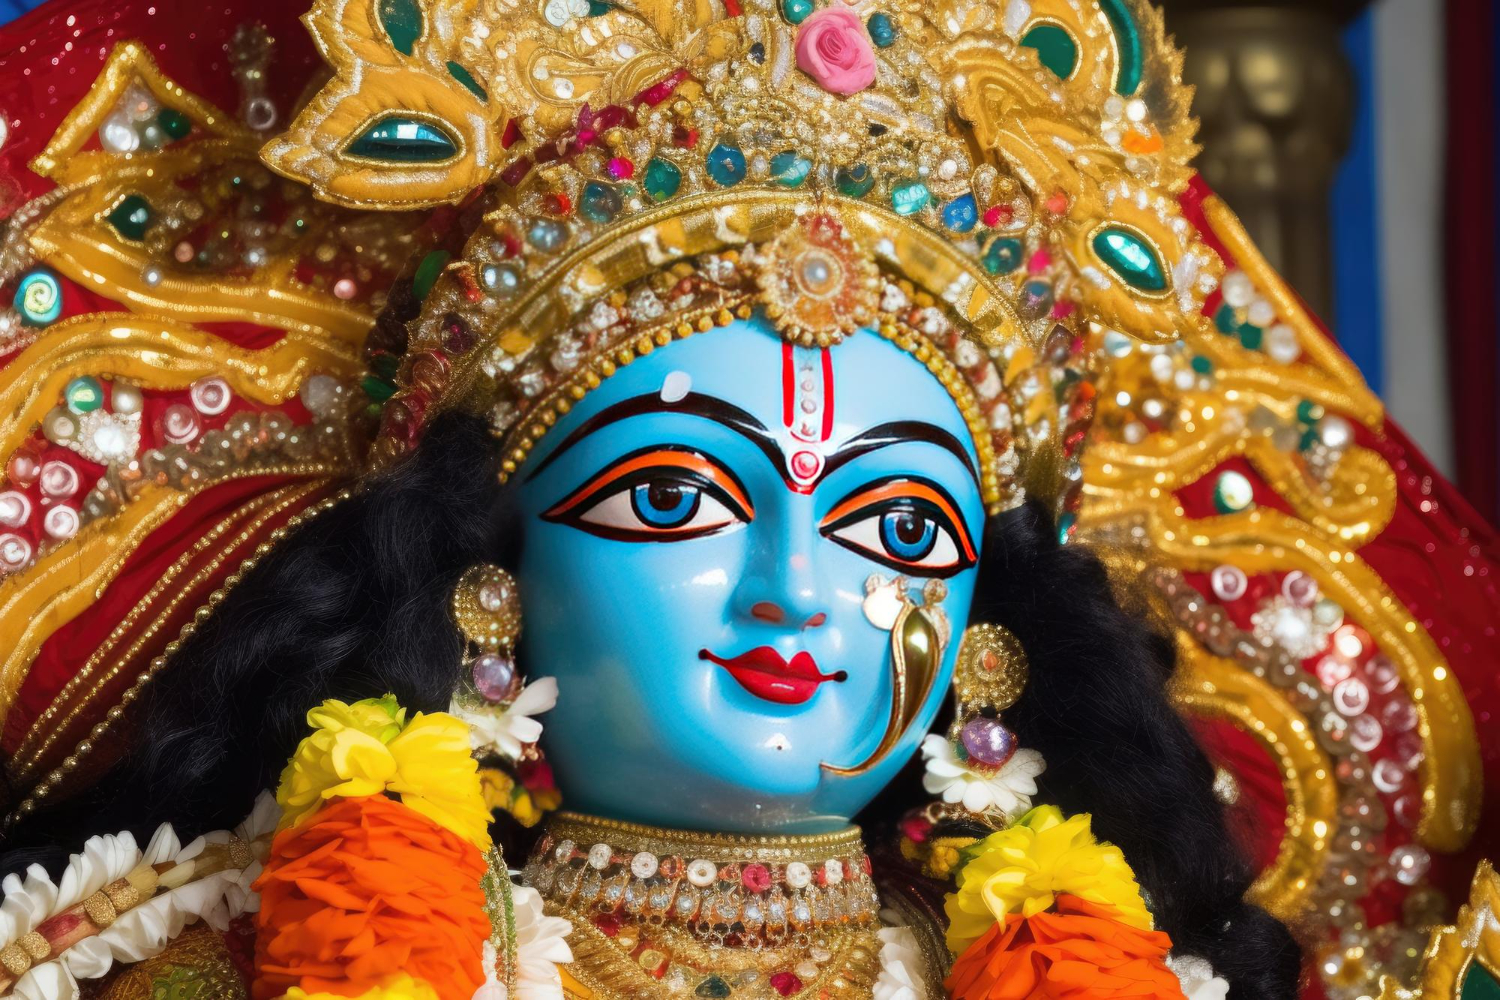 Why We Celebrate Ram Navami